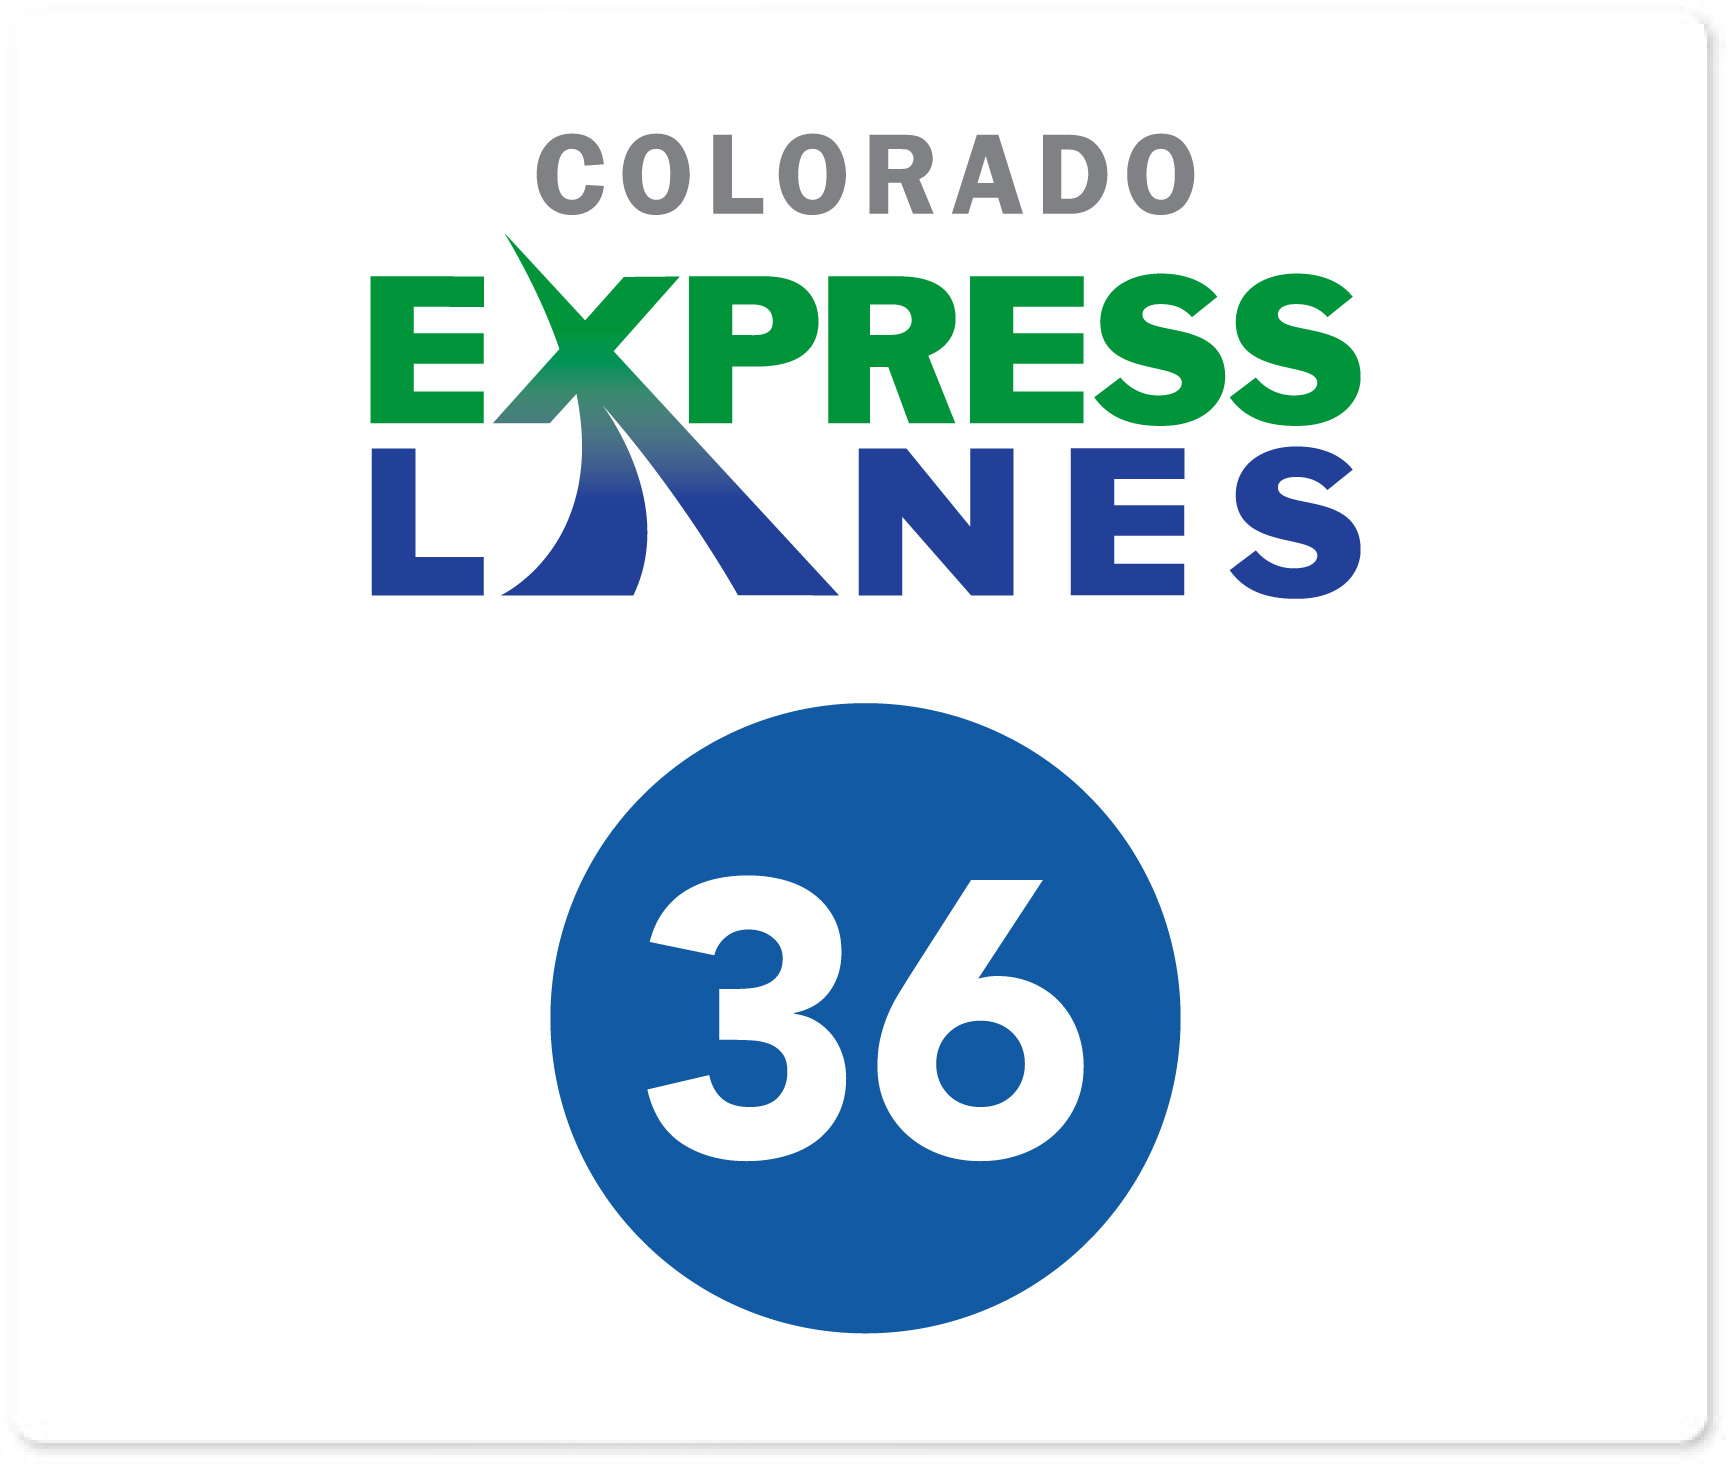 ExpressLanes_Website_Corridor_US36.jpg detail image